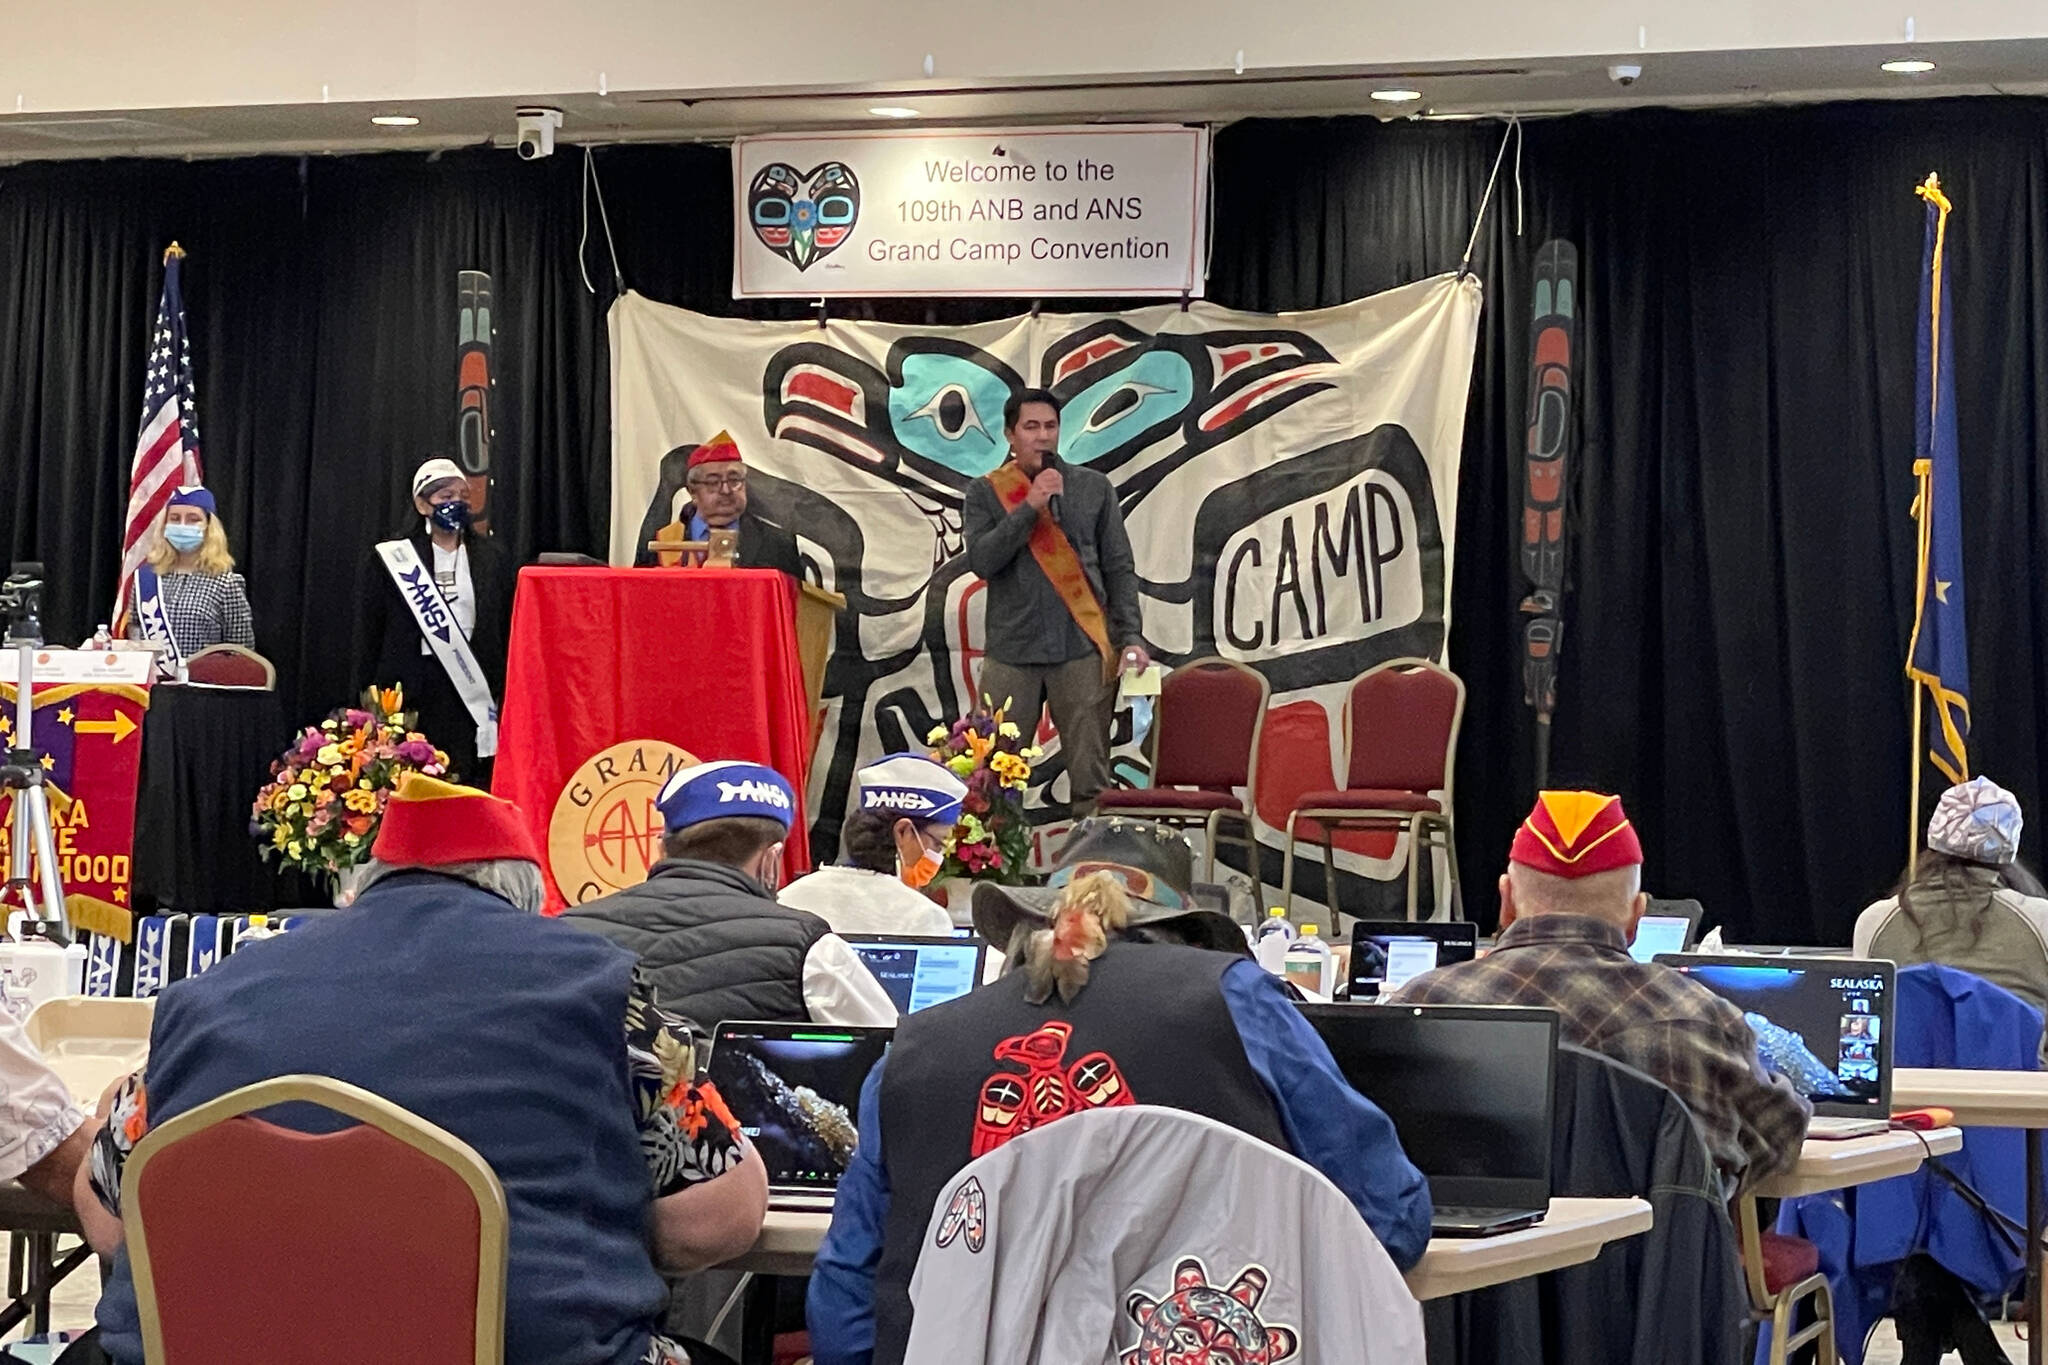 Speakers address participants in the Alaska Native Brotherhood/Alaska Native Sisterhood’s 109th Grand Camp Convention at Elizabeth Peratrovich Hall on Oct. 8, 2021. (Michael S. Lockett / Juneau Empire)